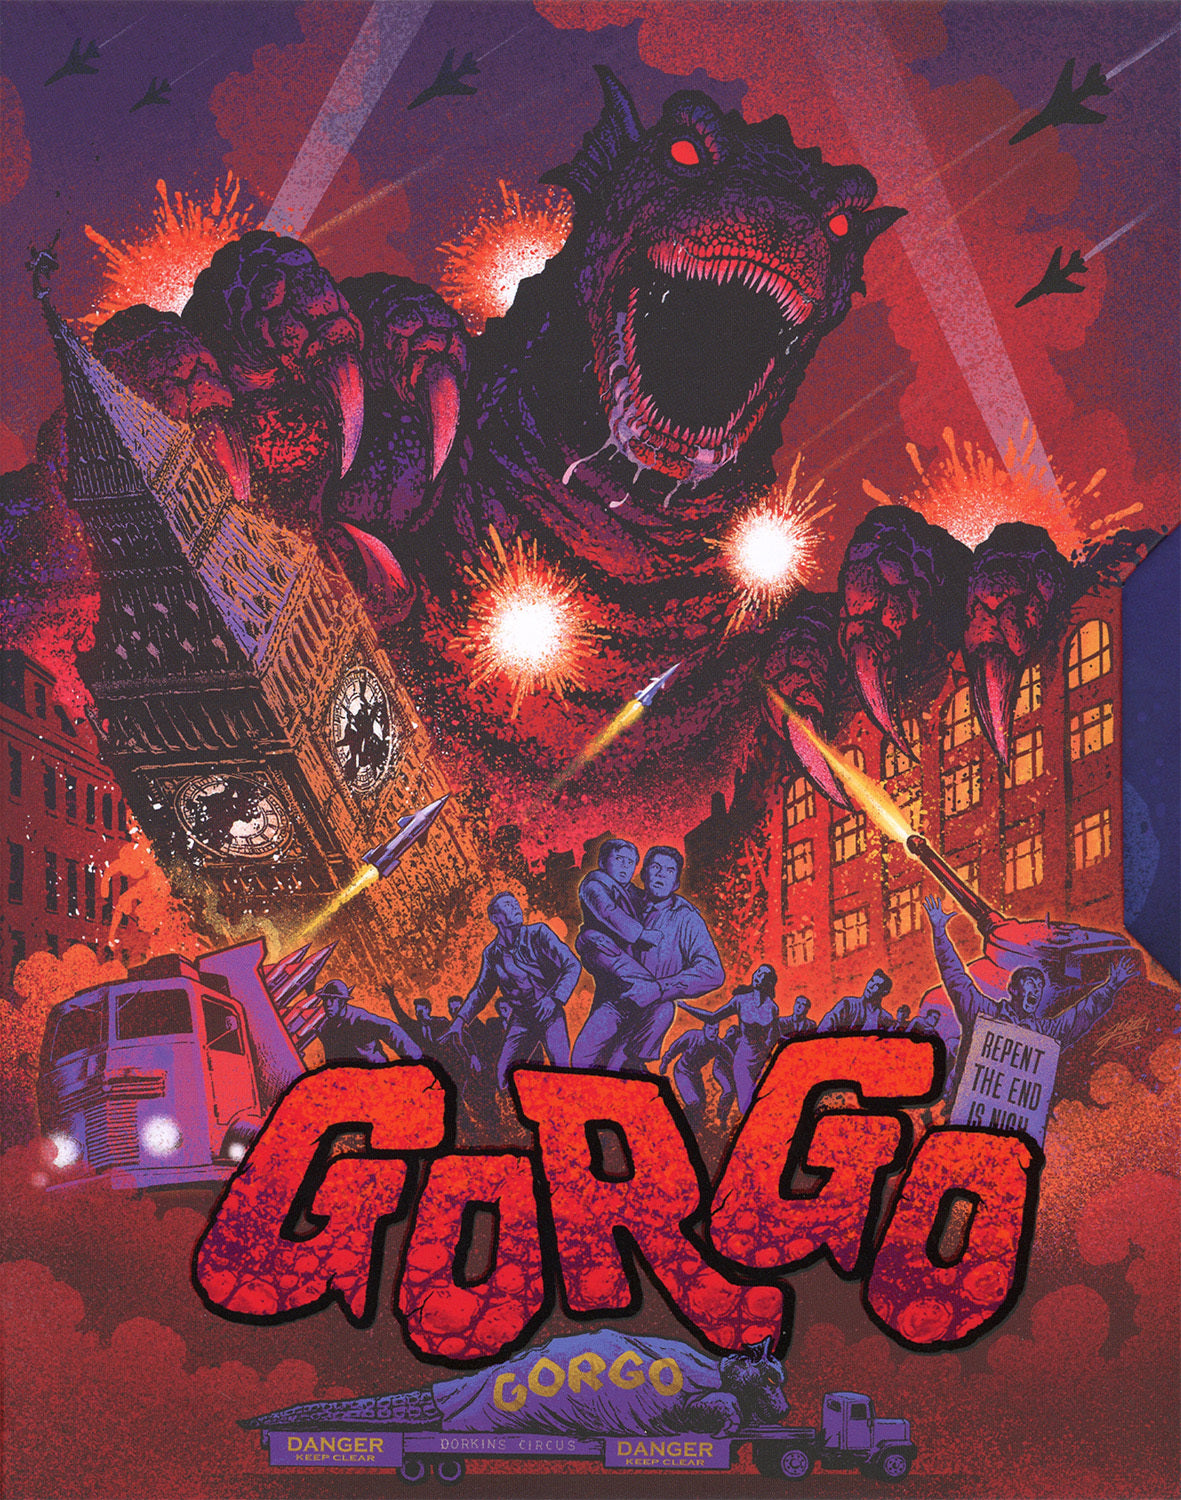 Gorgo [Hardbox / 2 Disc]